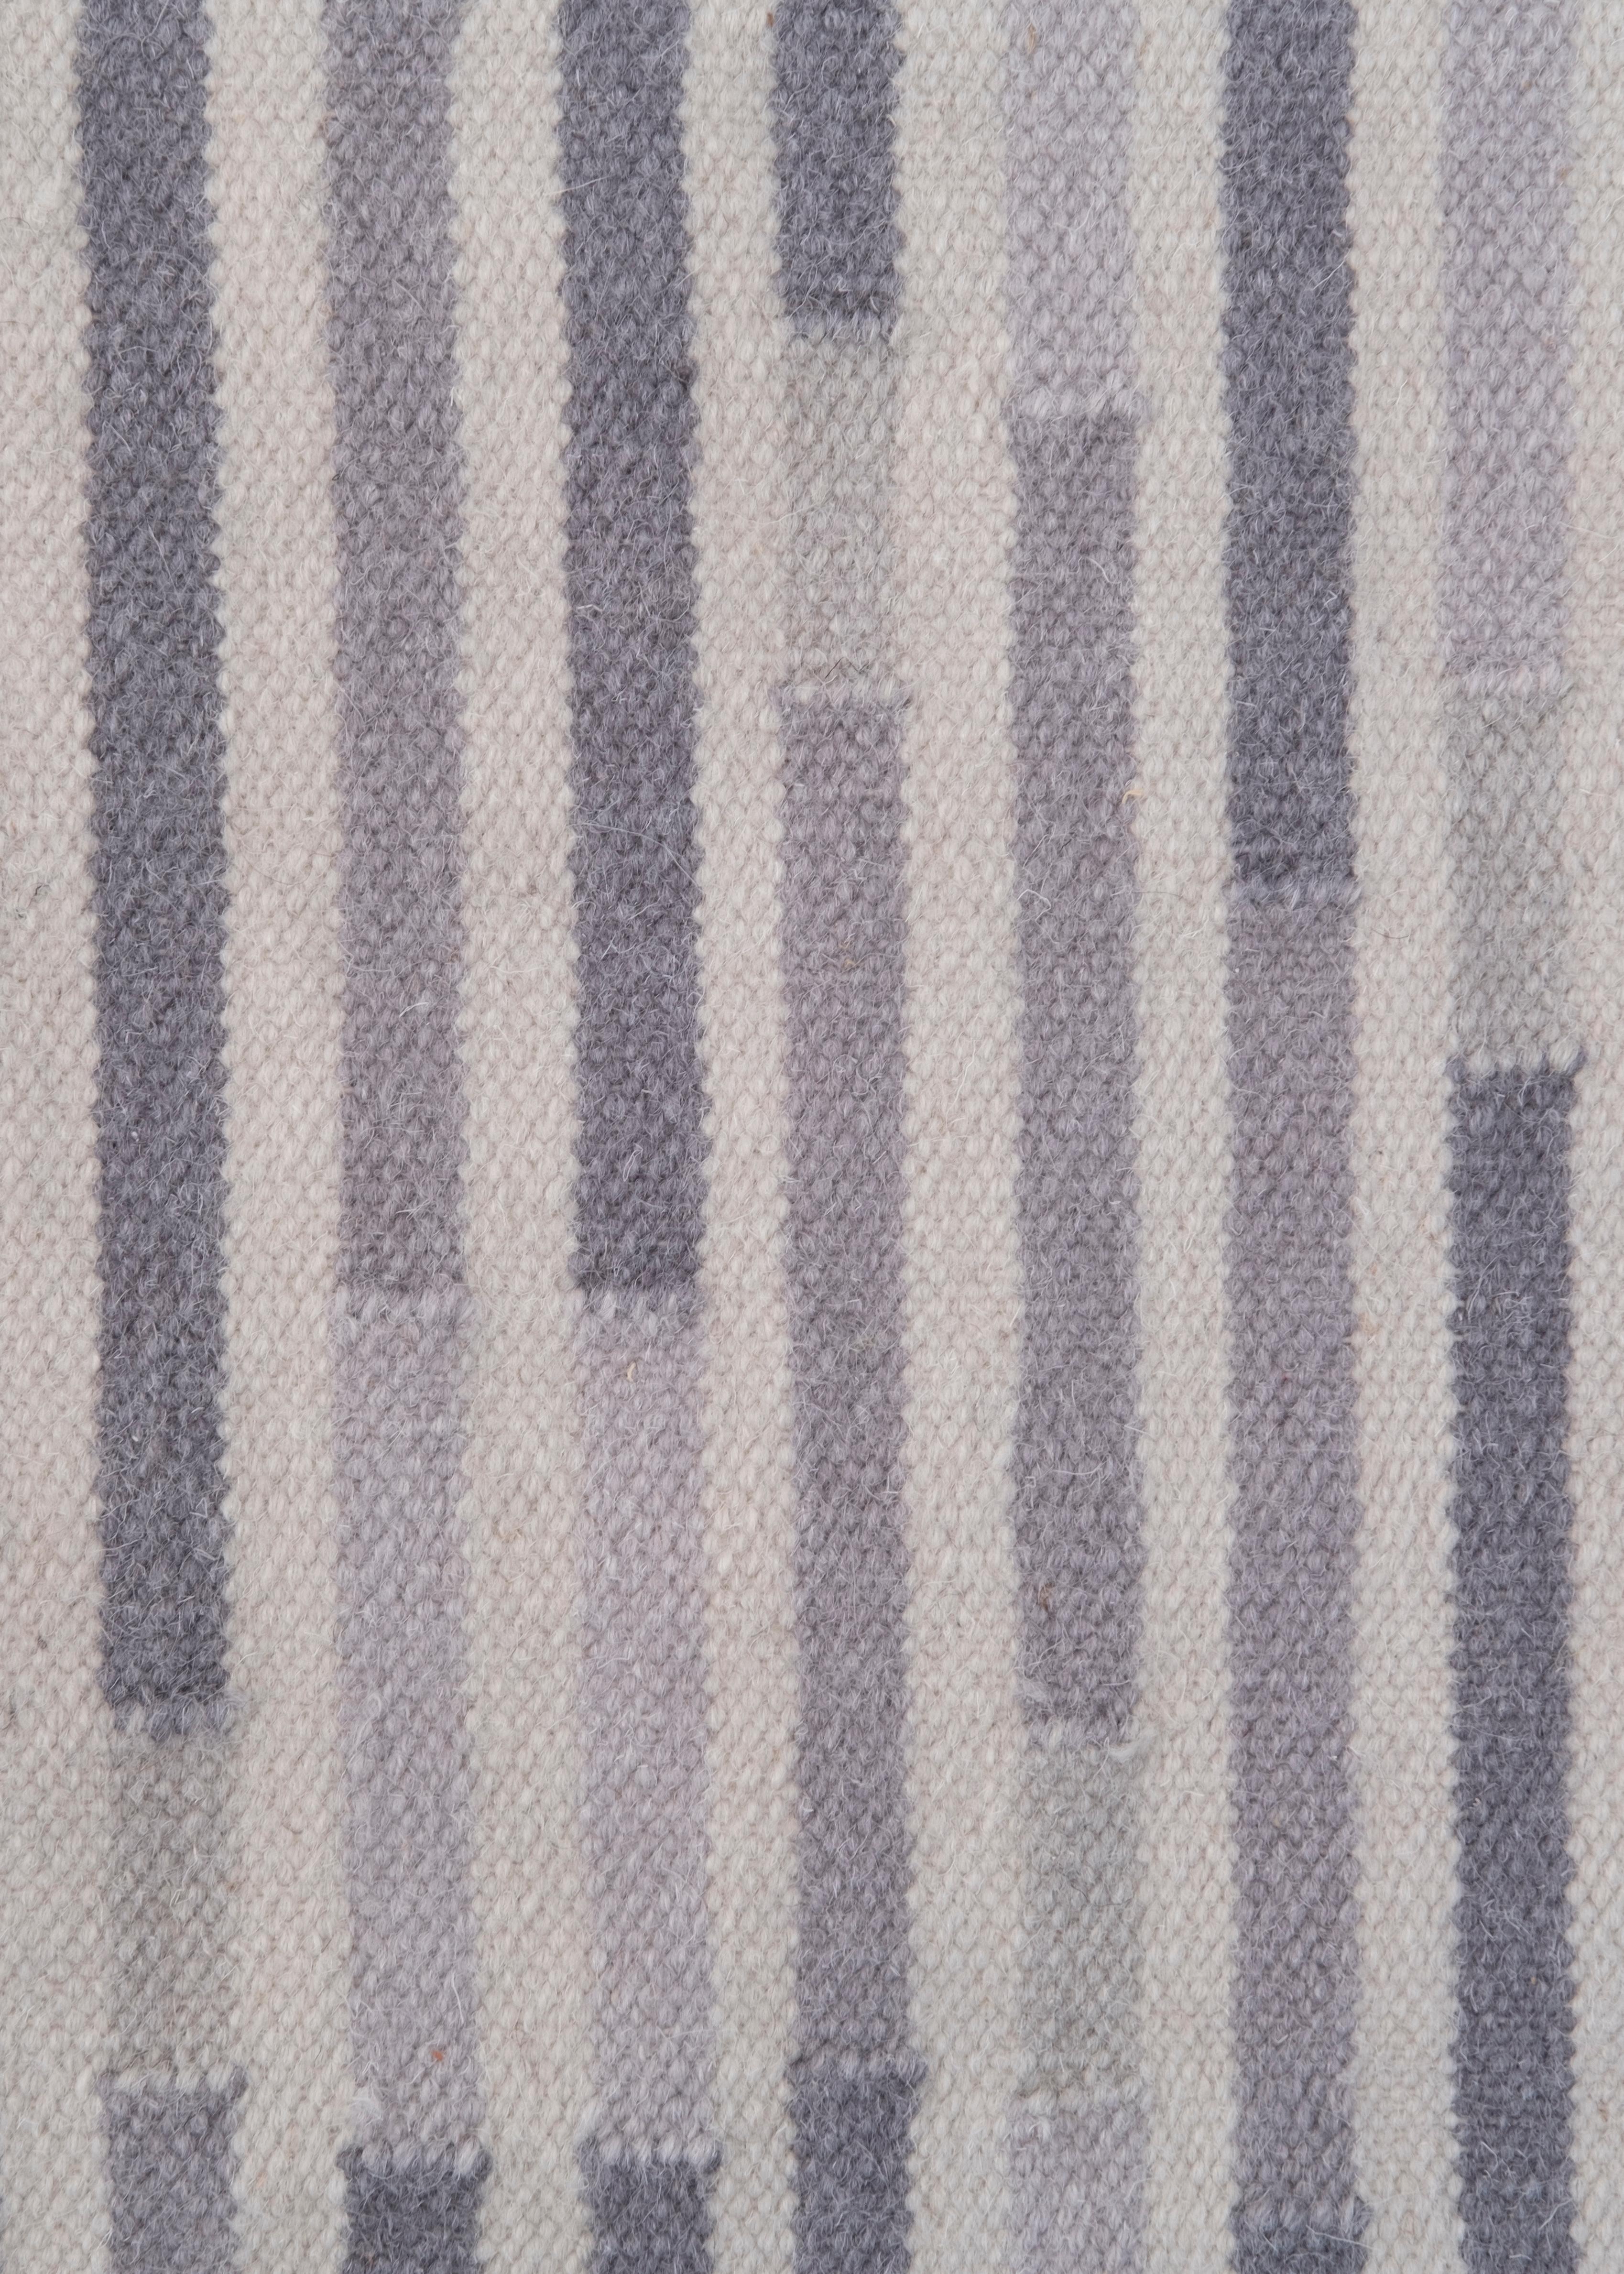 Tempo Uno - Cold - Design Summer Kilim Rug Contemporary Carpet Wool Cotton Flat In New Condition For Sale In MILANO, ML